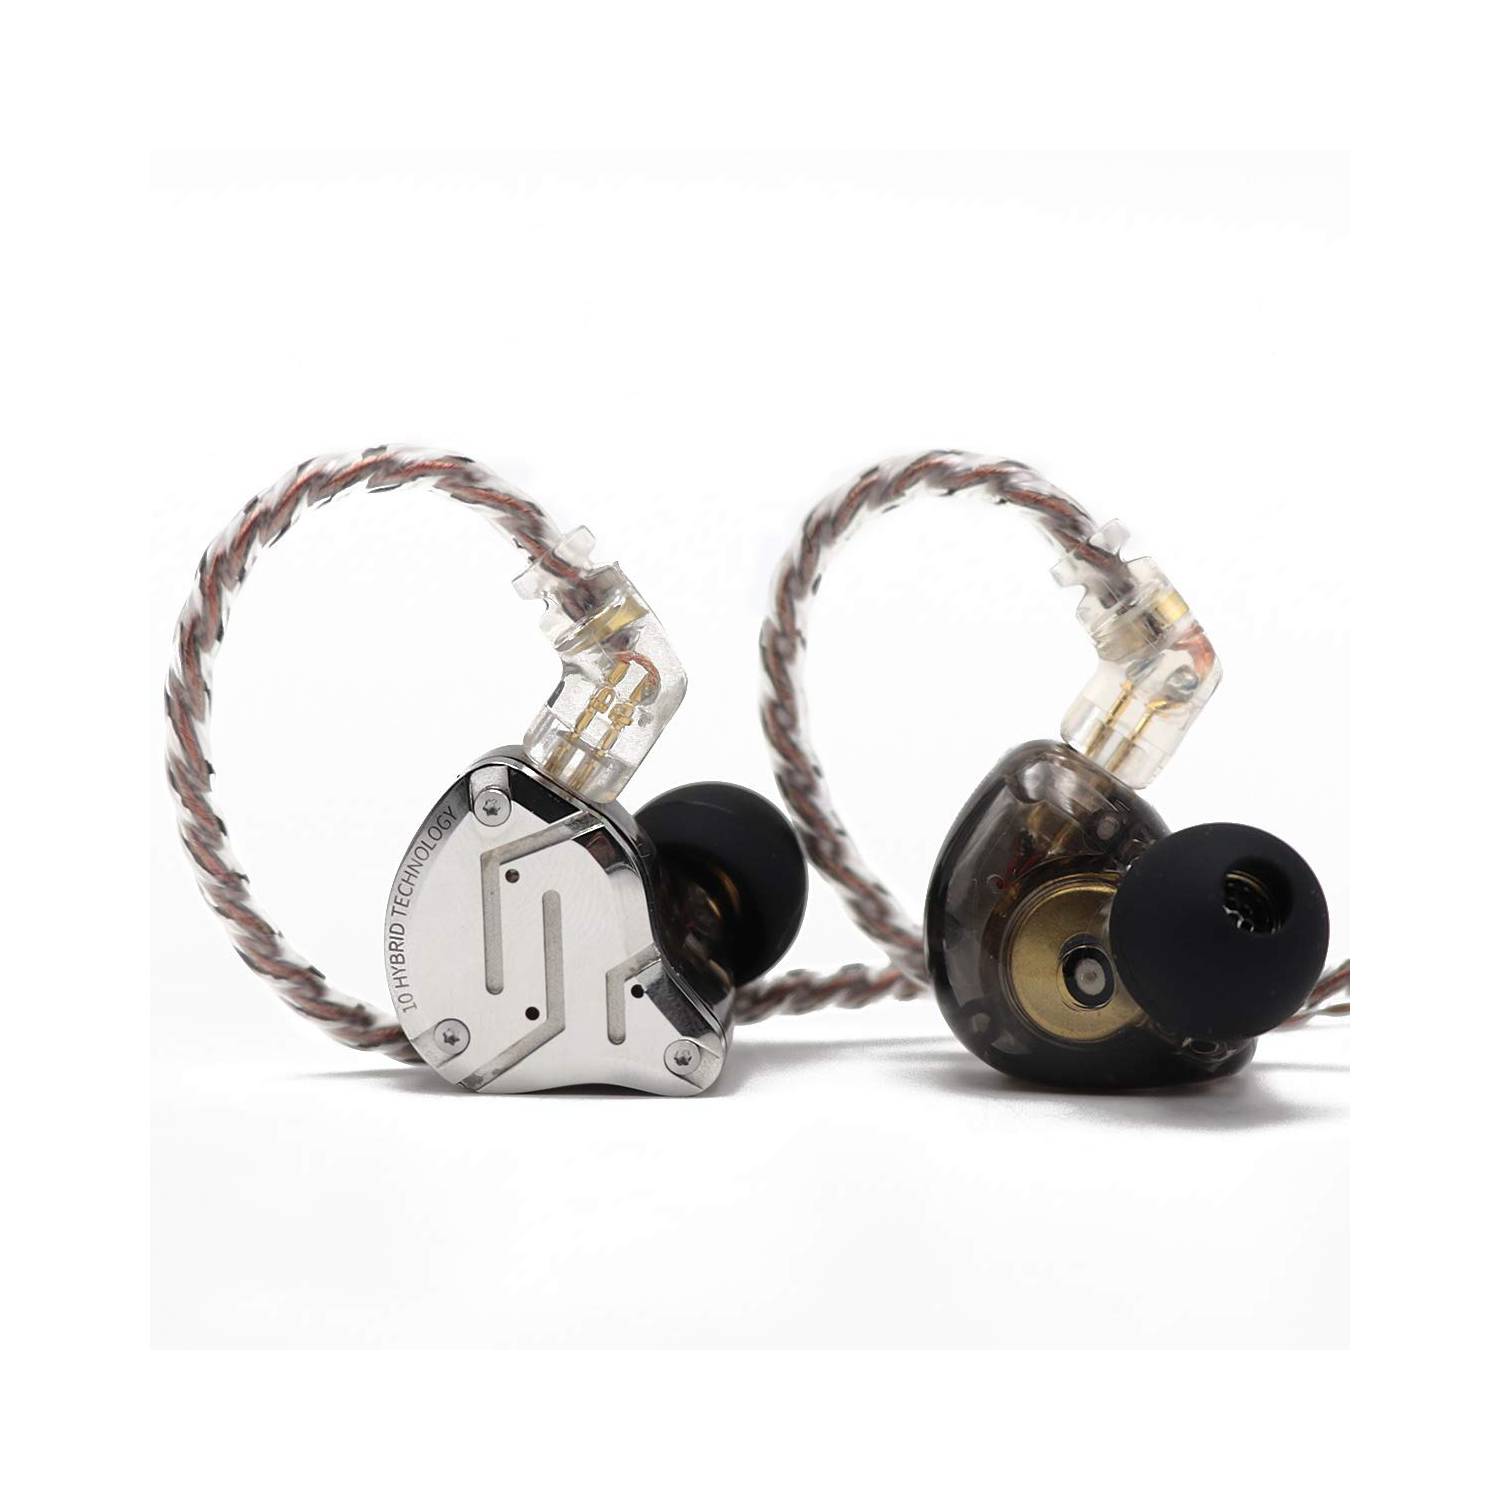 Cascos auriculares para niños Kiwibeat Smart 101 + micrófono integrado